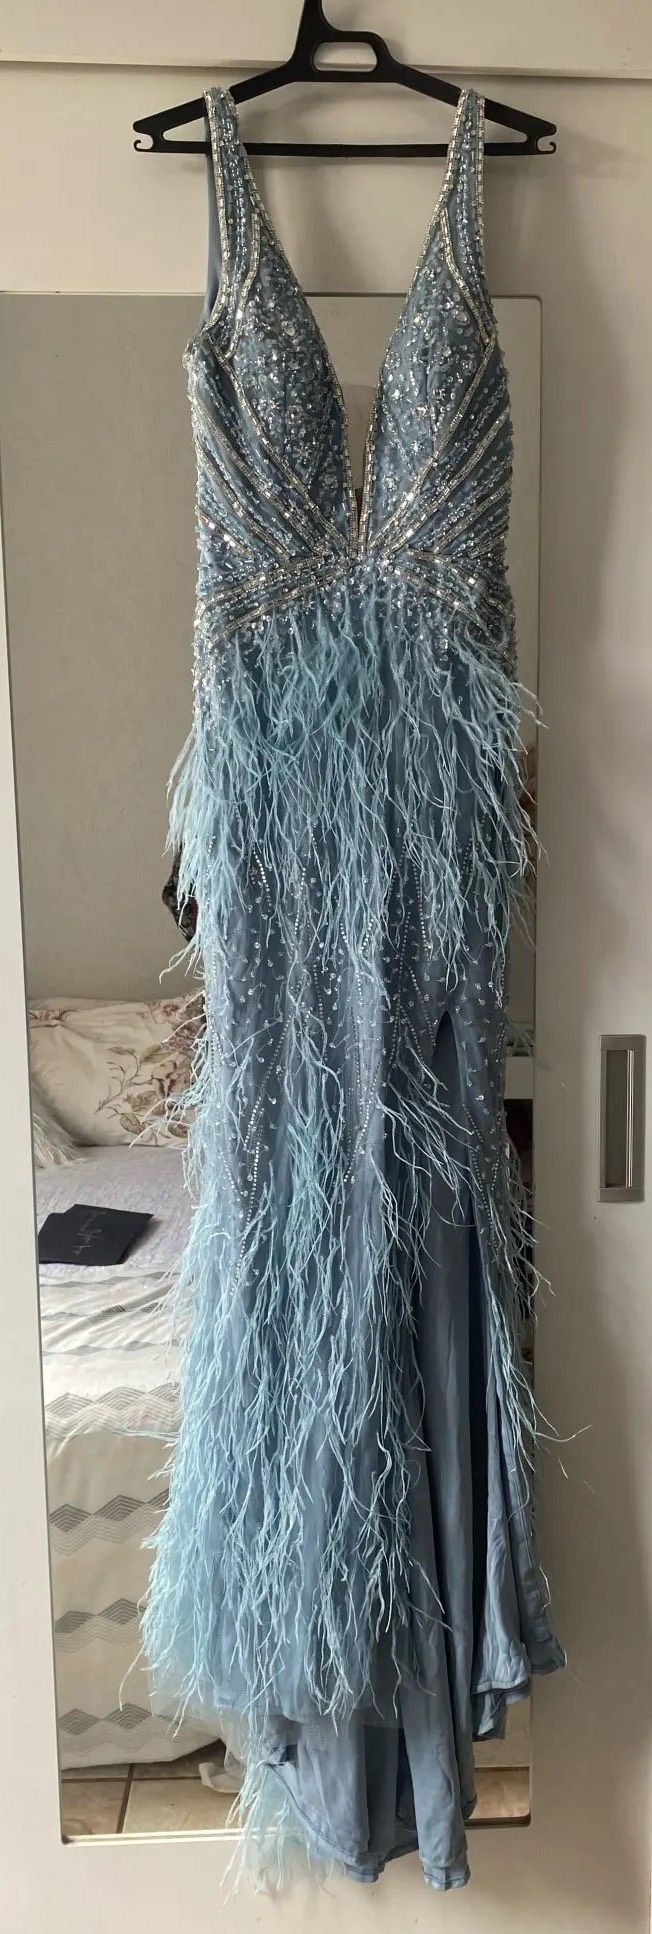 Size 6 Long Sleeve Blue Side Slit Dress on Queenly